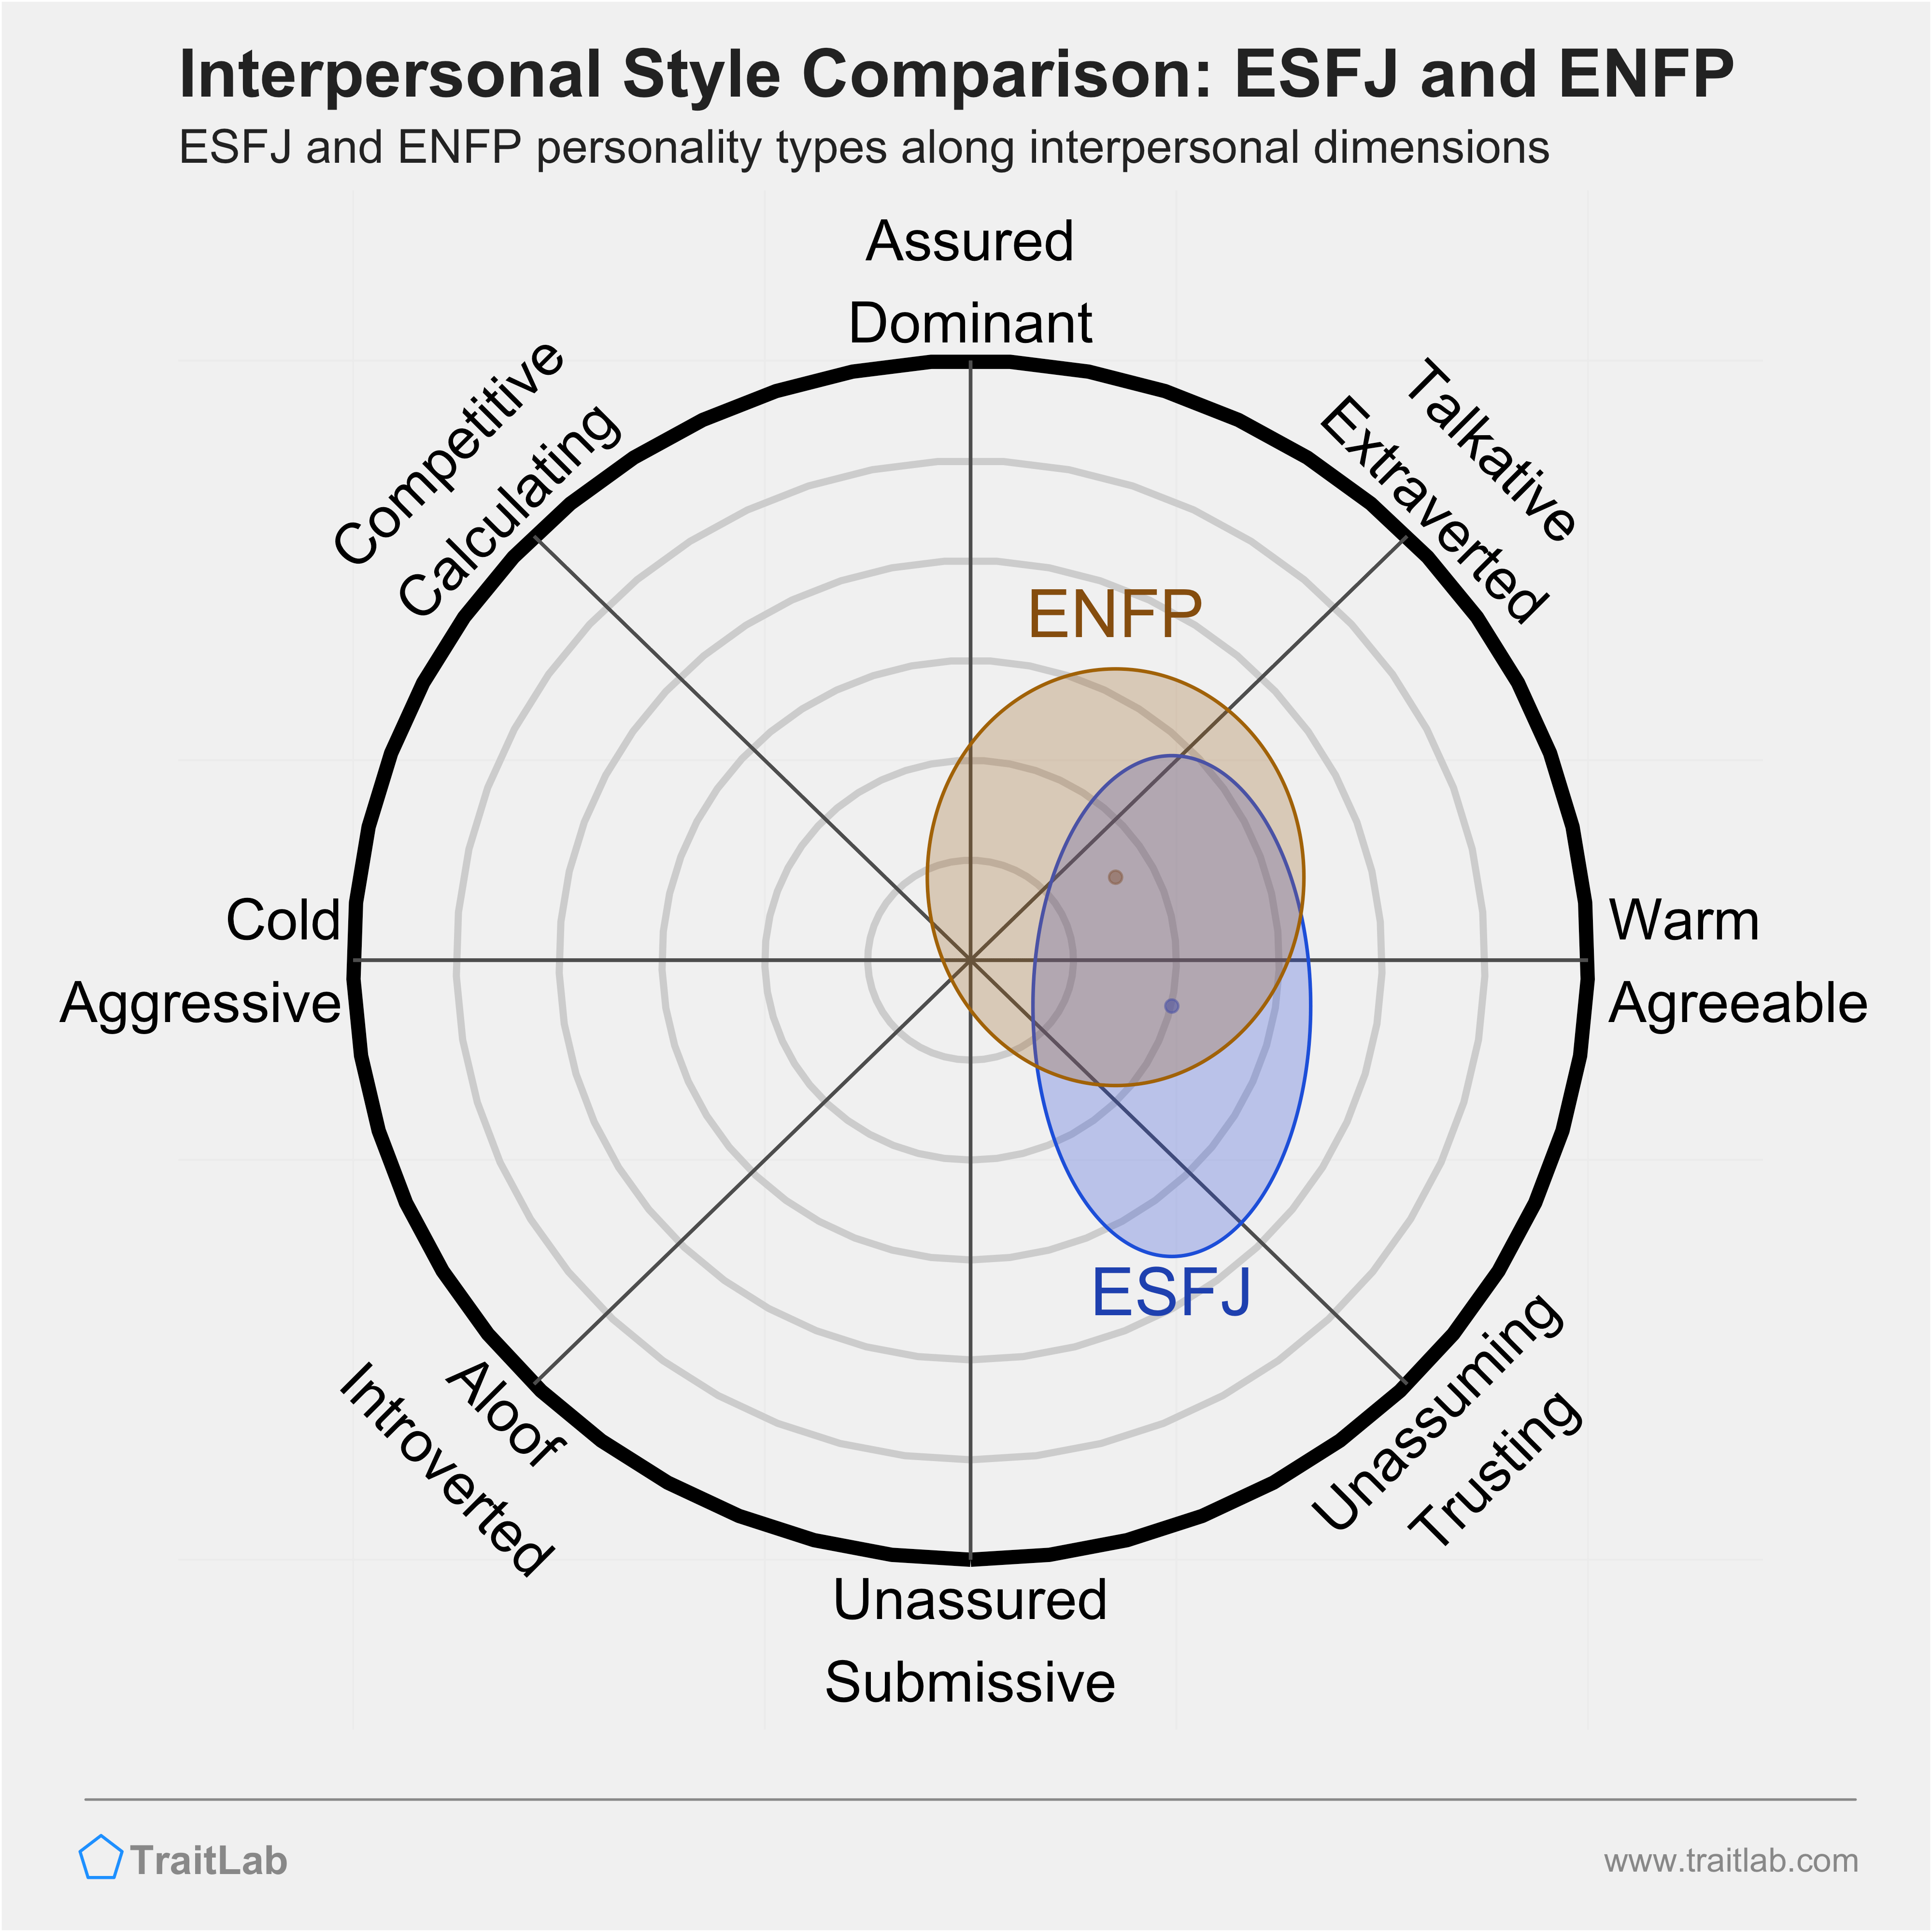 ESFJ and ENFP comparison across interpersonal dimensions